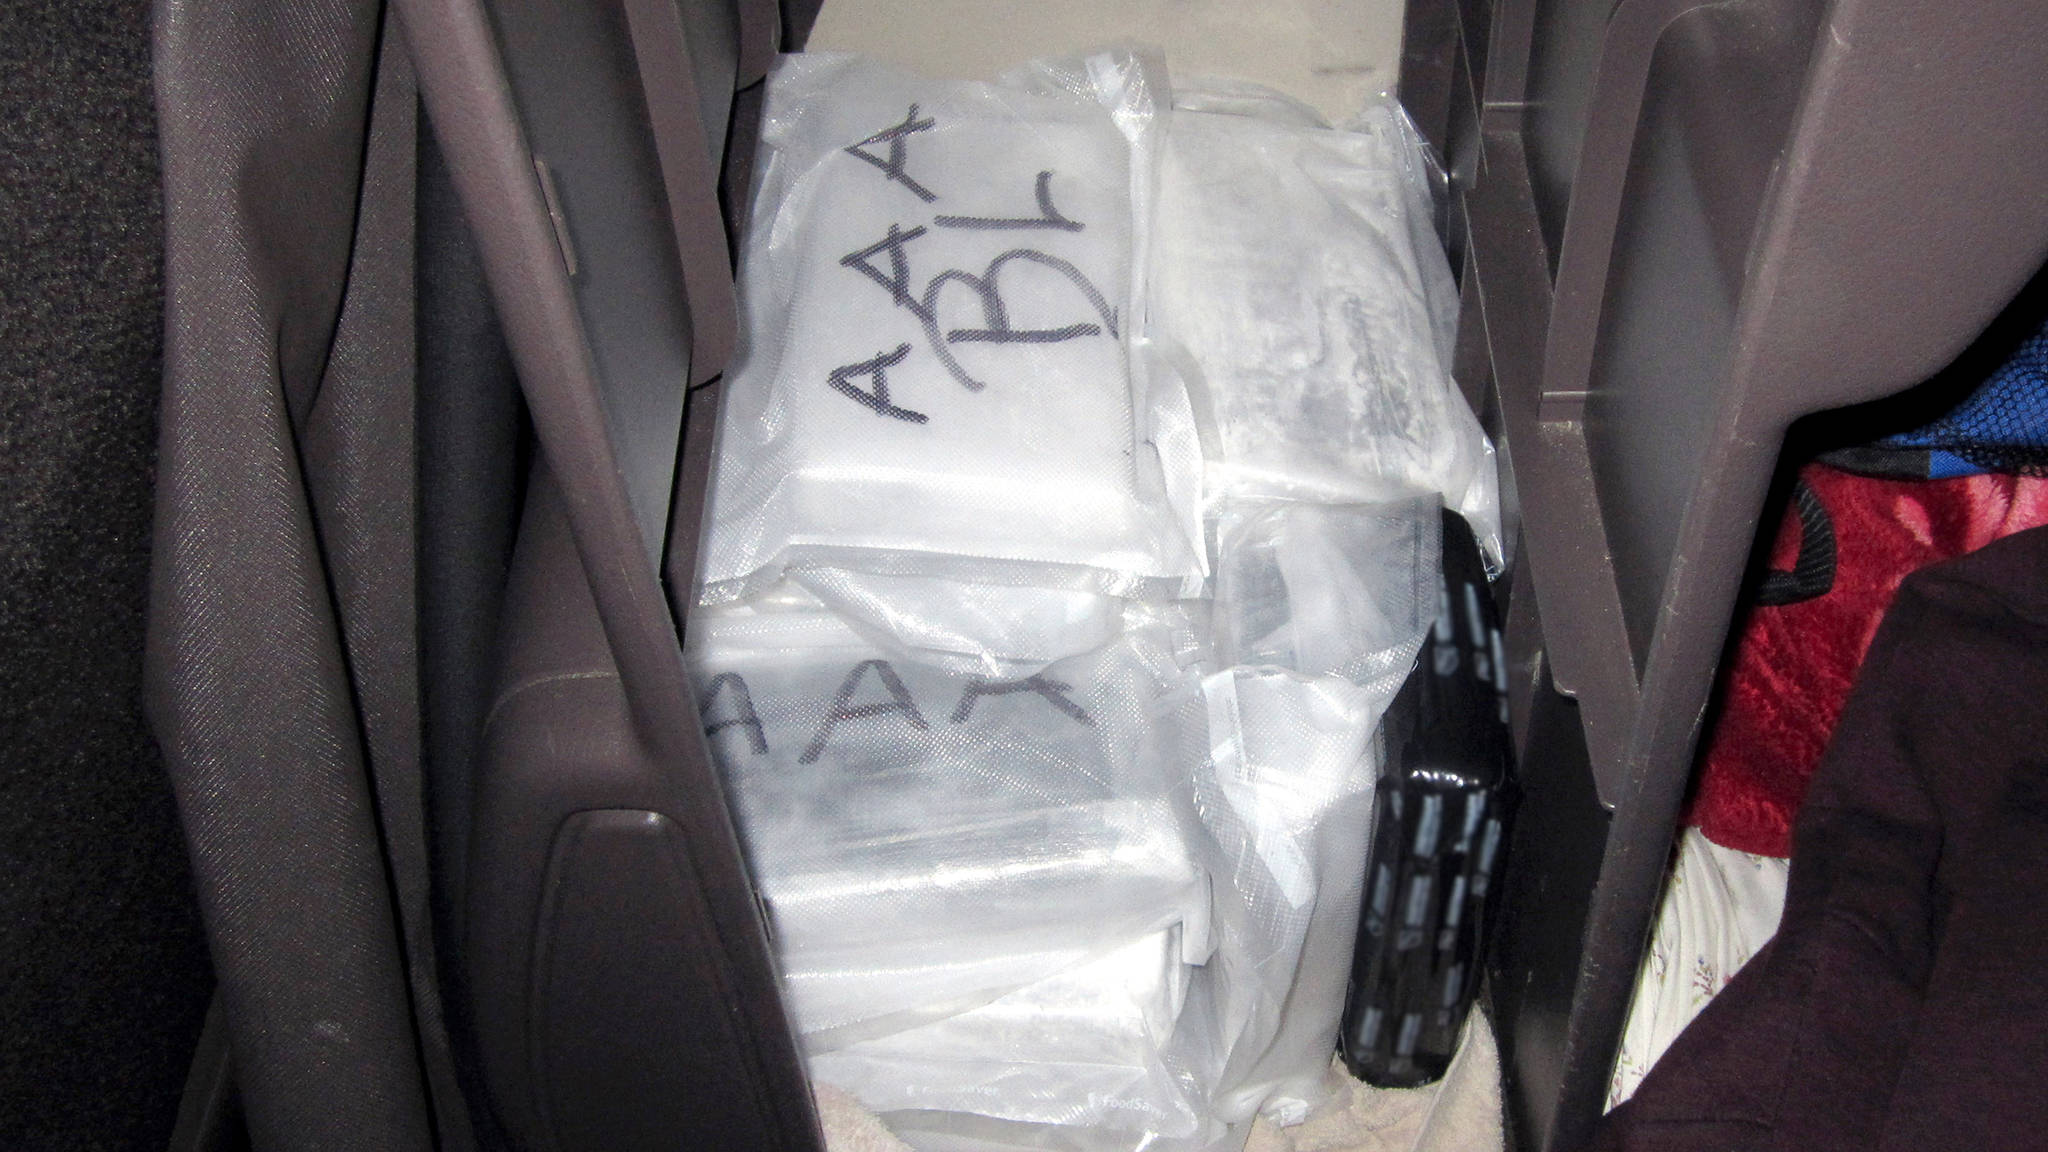 Coutts border officers seize 21 kgs suspected cocaine